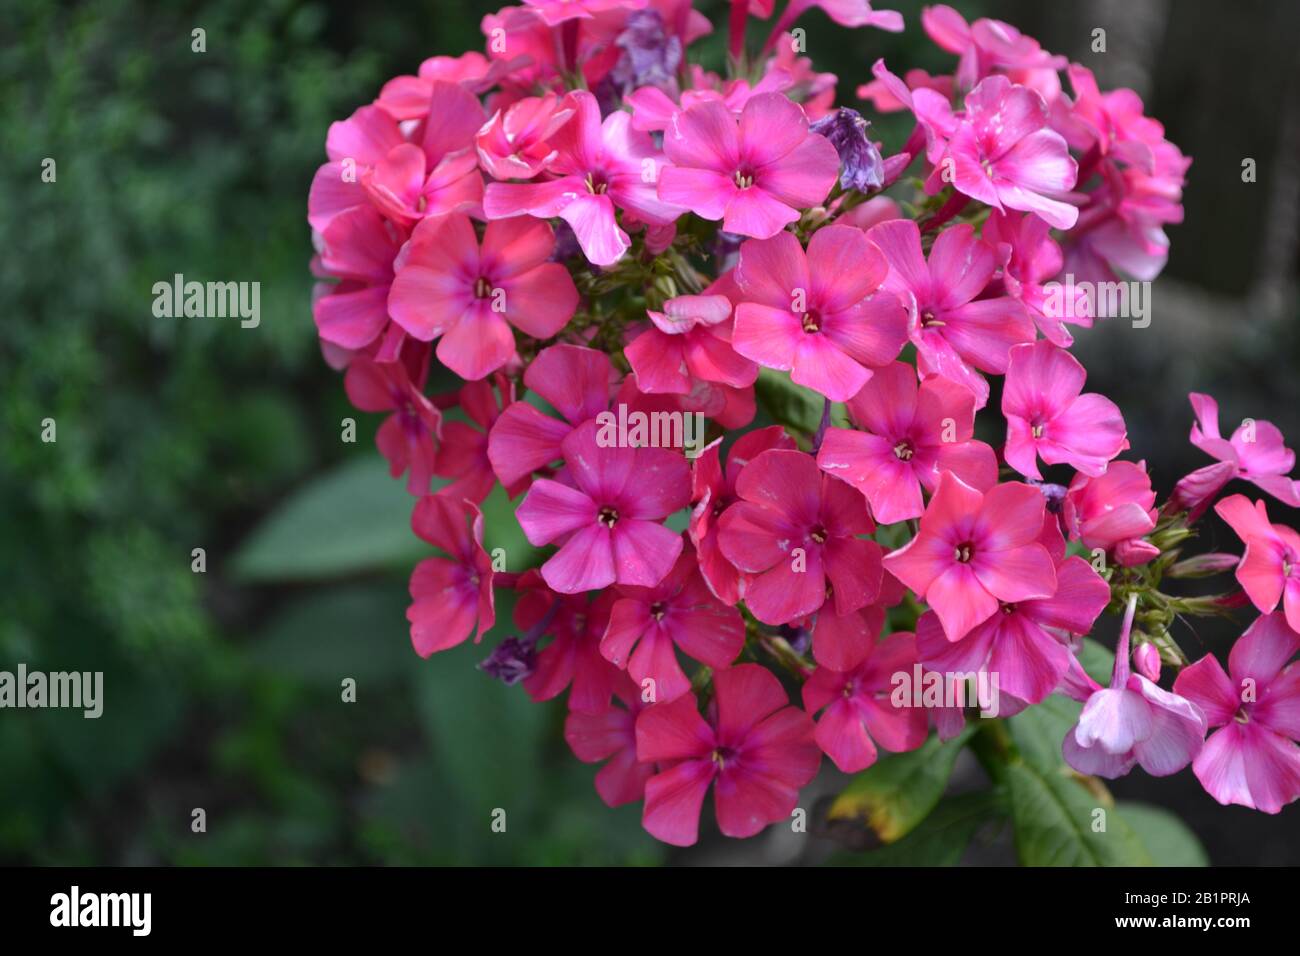 Phlox. Polemoniaceae. Growing flowers. Flowerbed. Garden. Floriculture. Pink summery. Beautiful flowers. Green leaves. High bushes. Summer. Horizontal Stock Photo